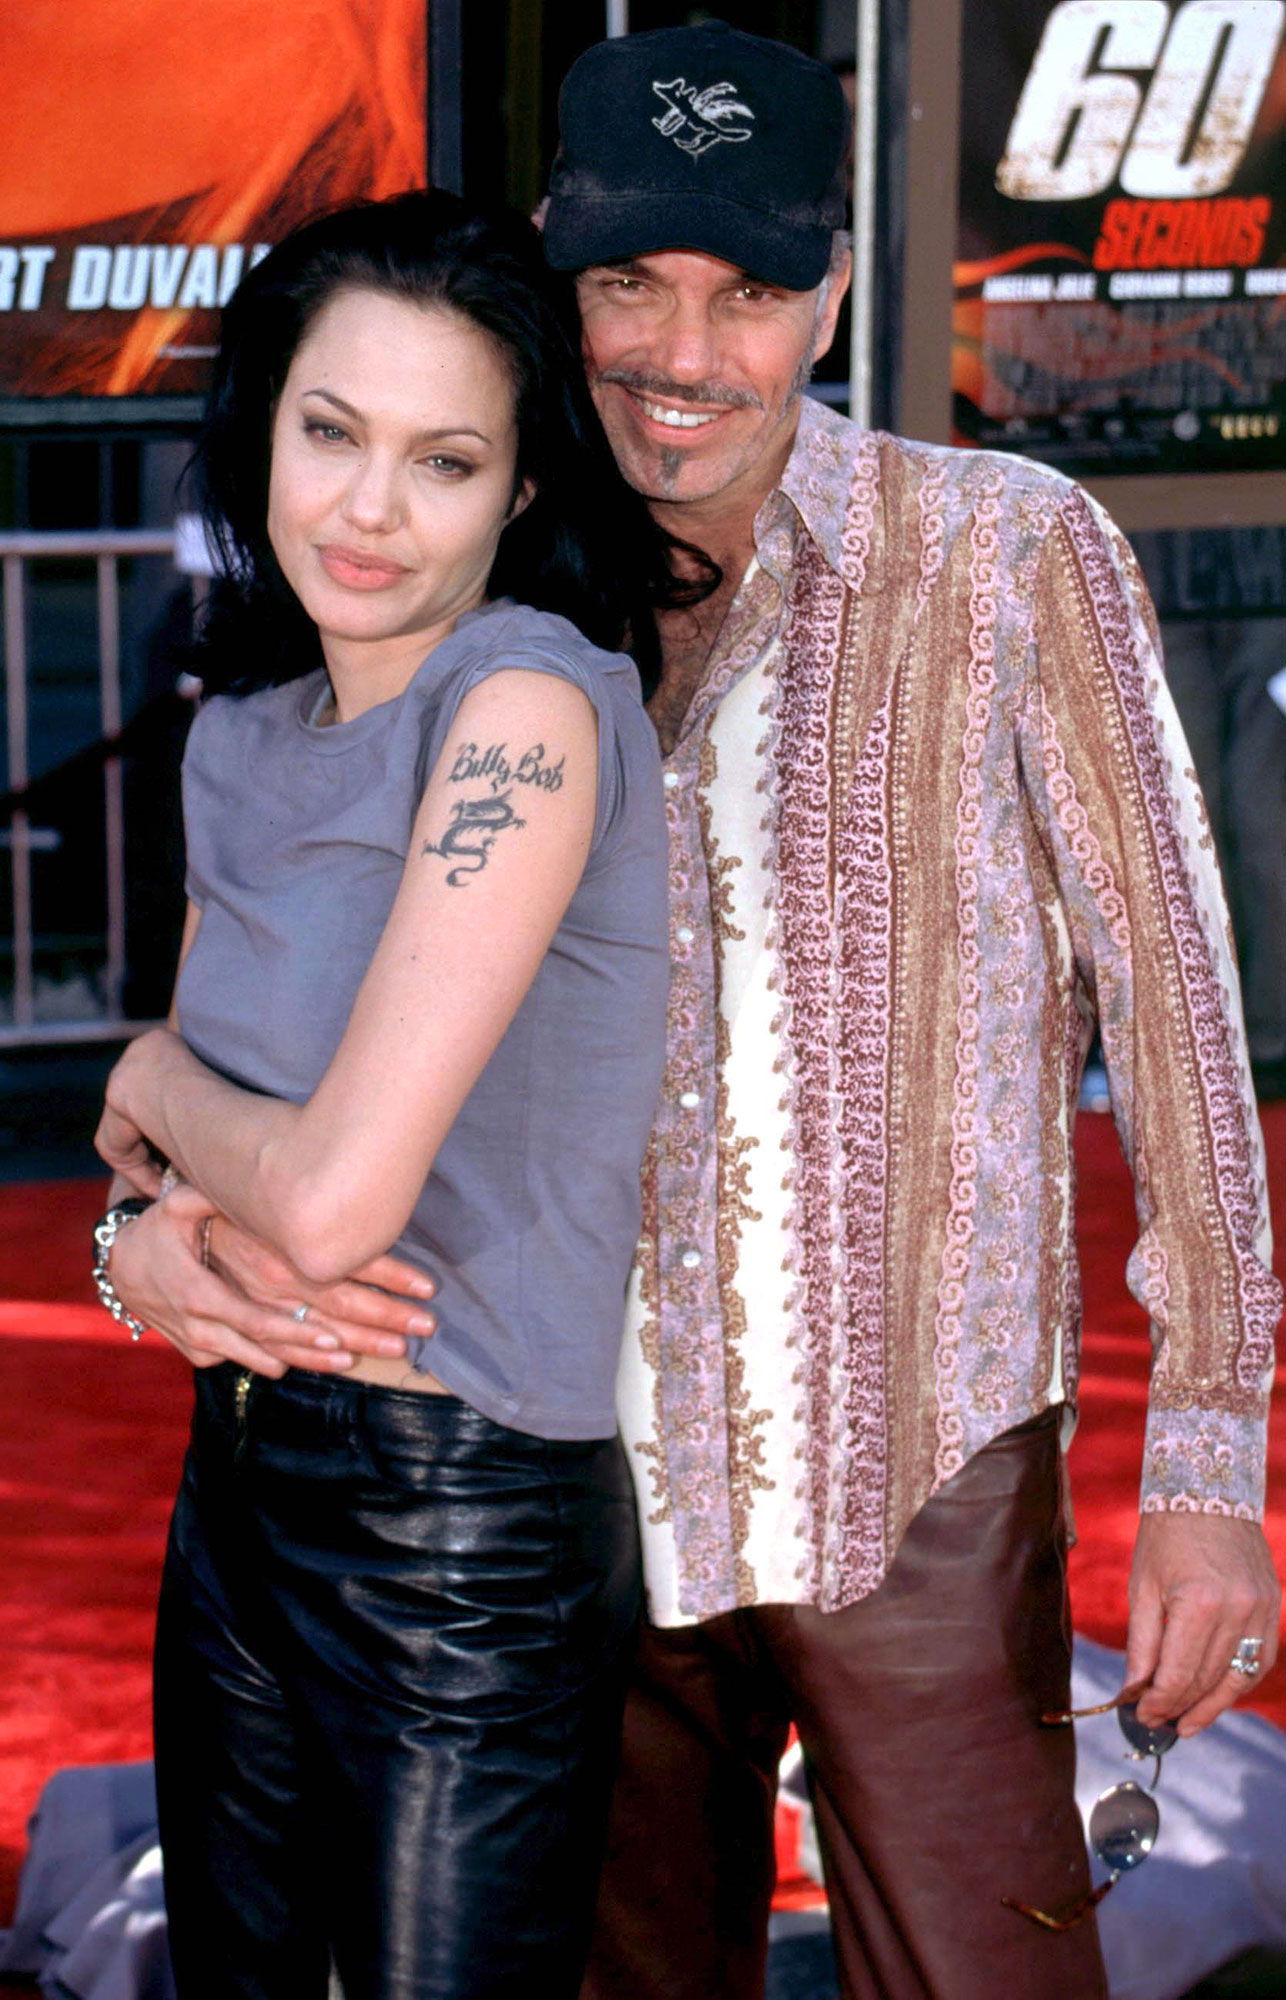 Jolie dating angelina Angelina Jolie